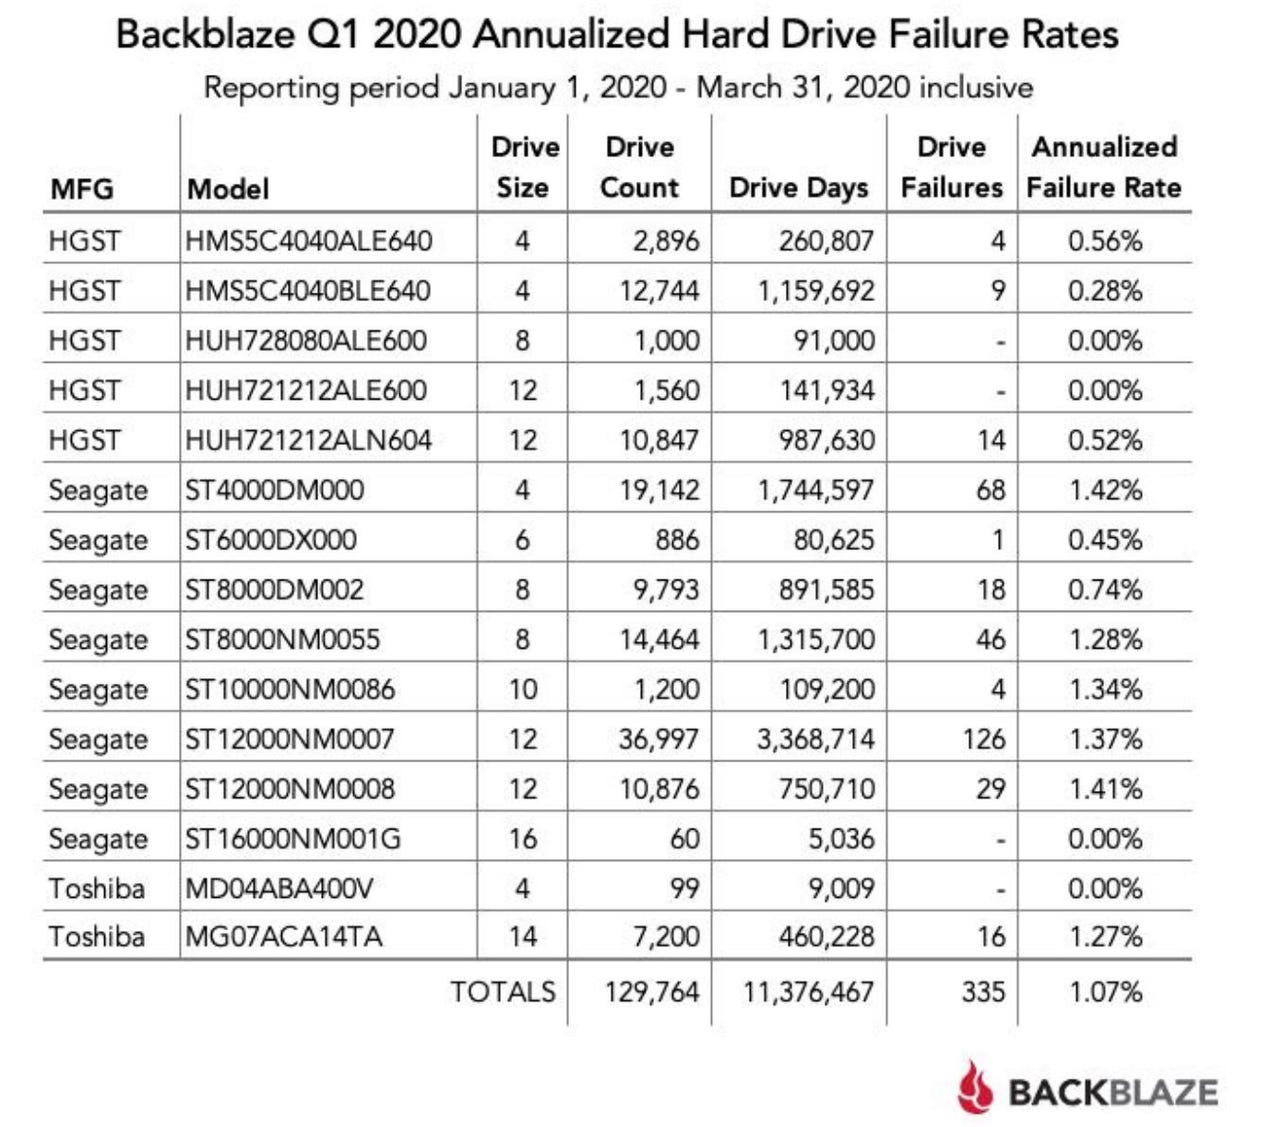 Backblaze data Q1 2020